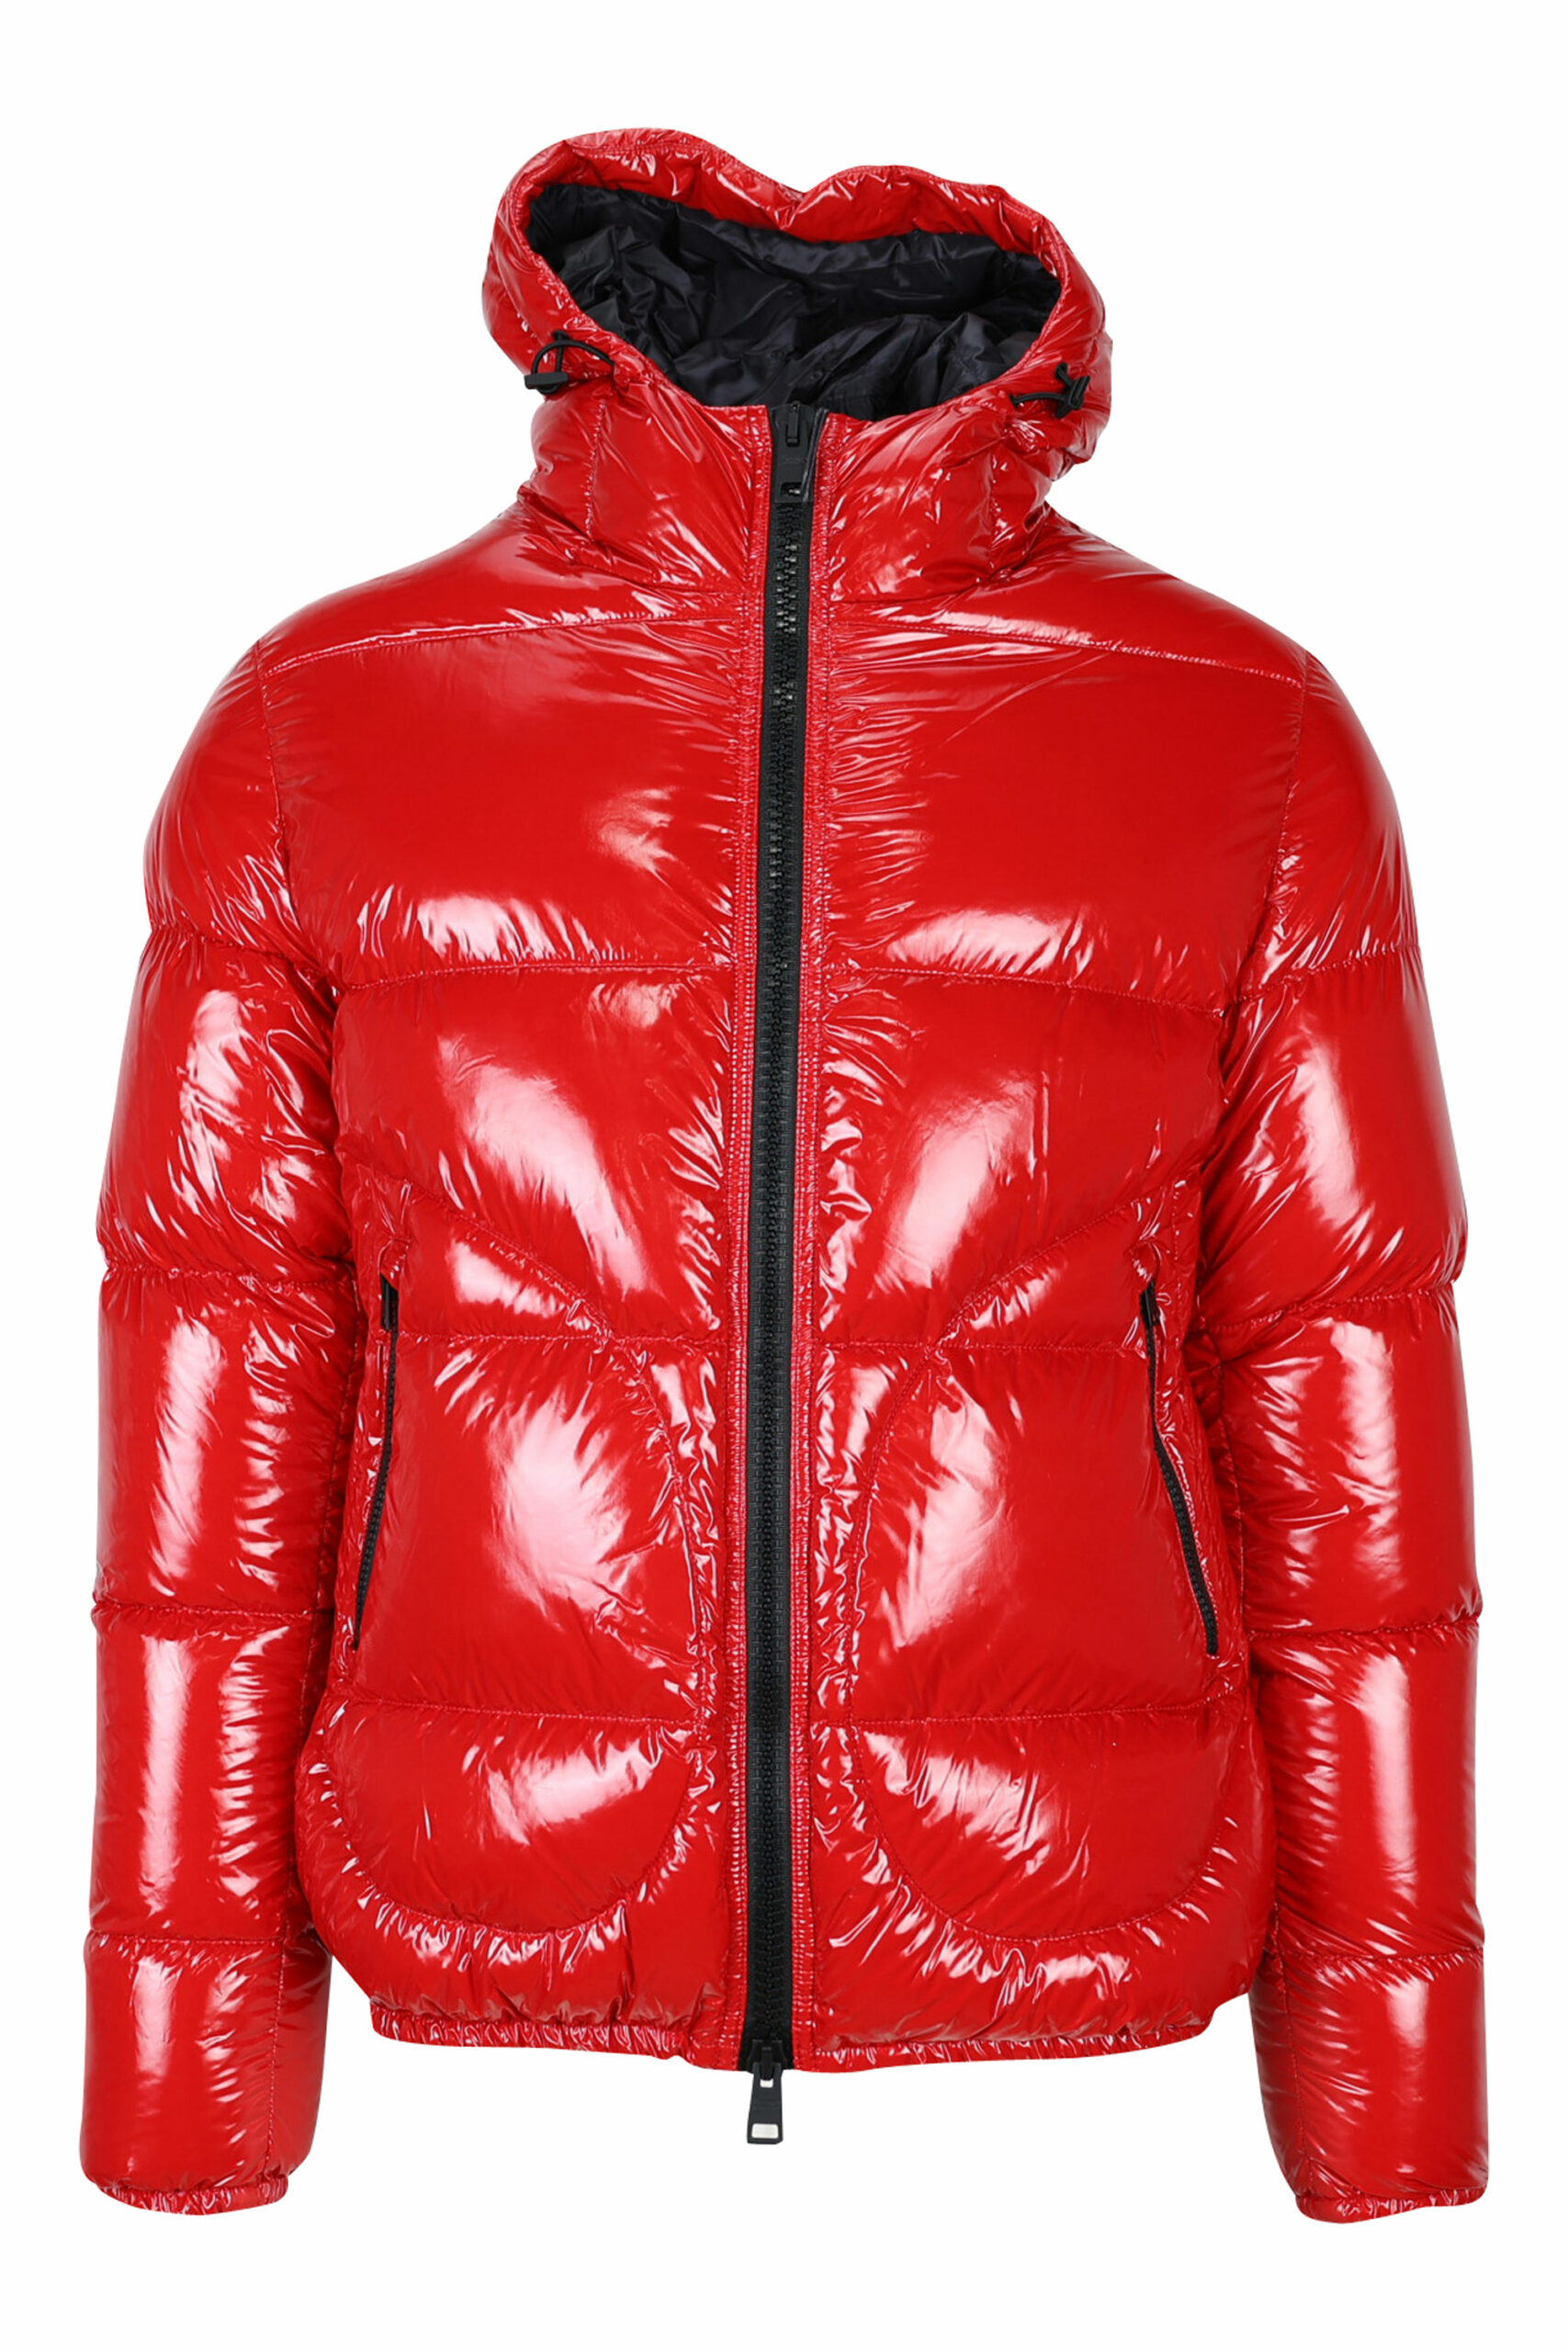 Herno - Red bomber jacket 